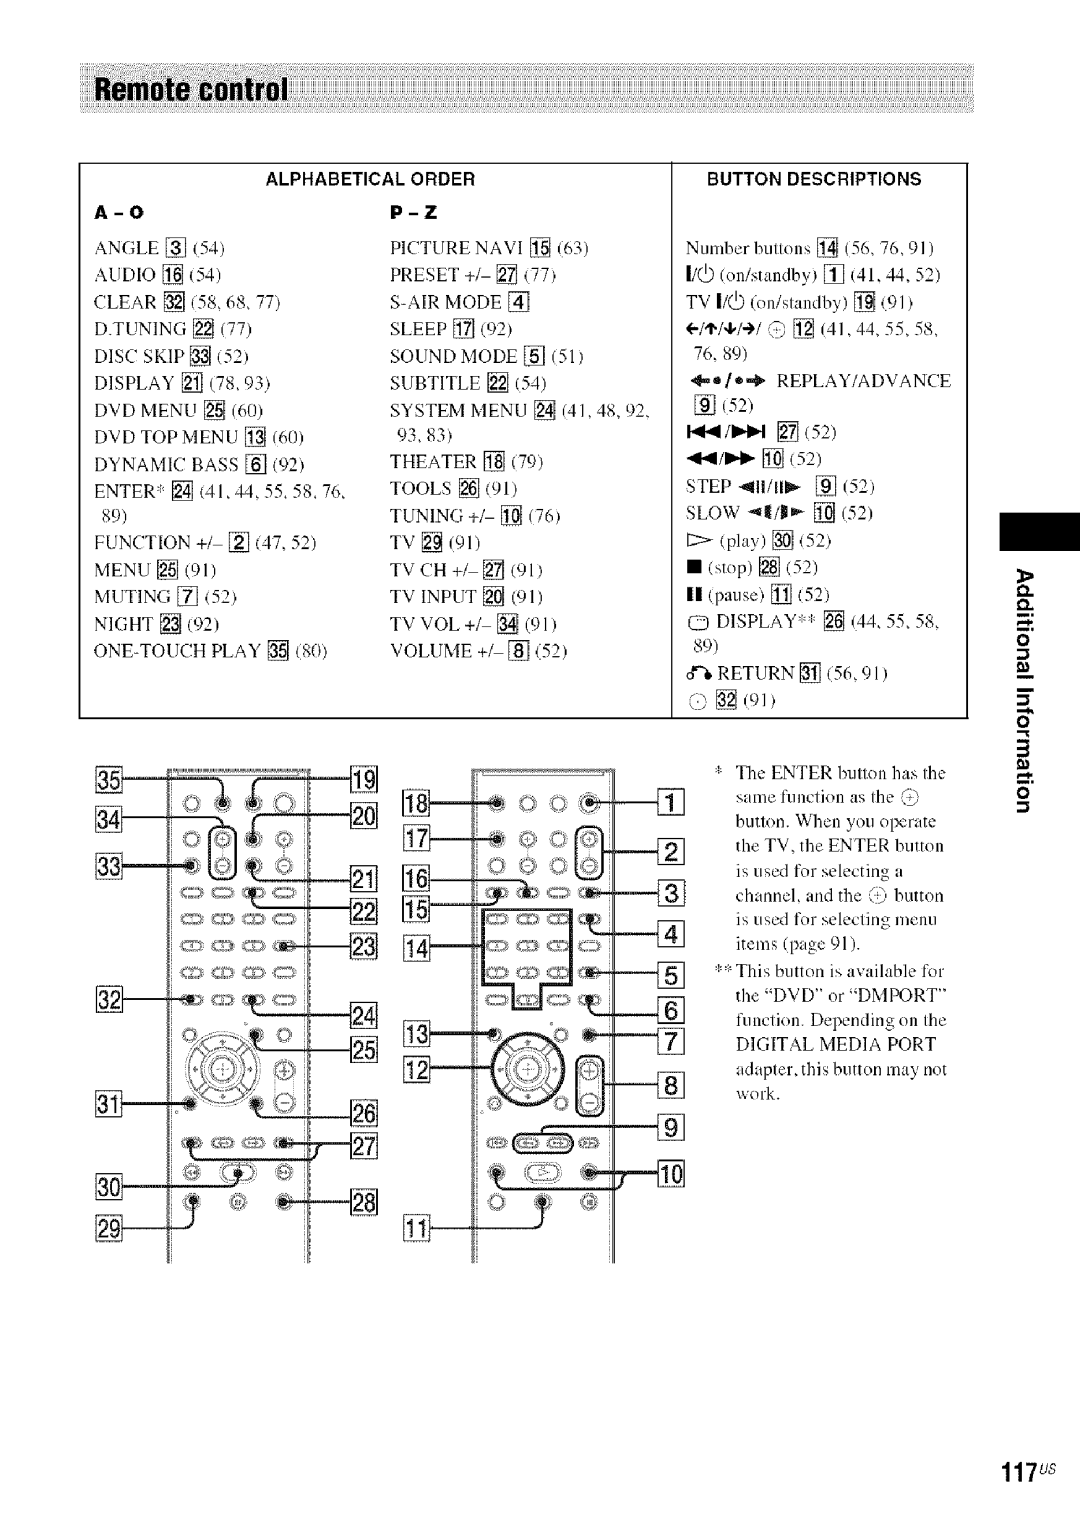 Sony DAVHDX279W, HDX277WC, HDX576WF manual N Nk N, 117us 